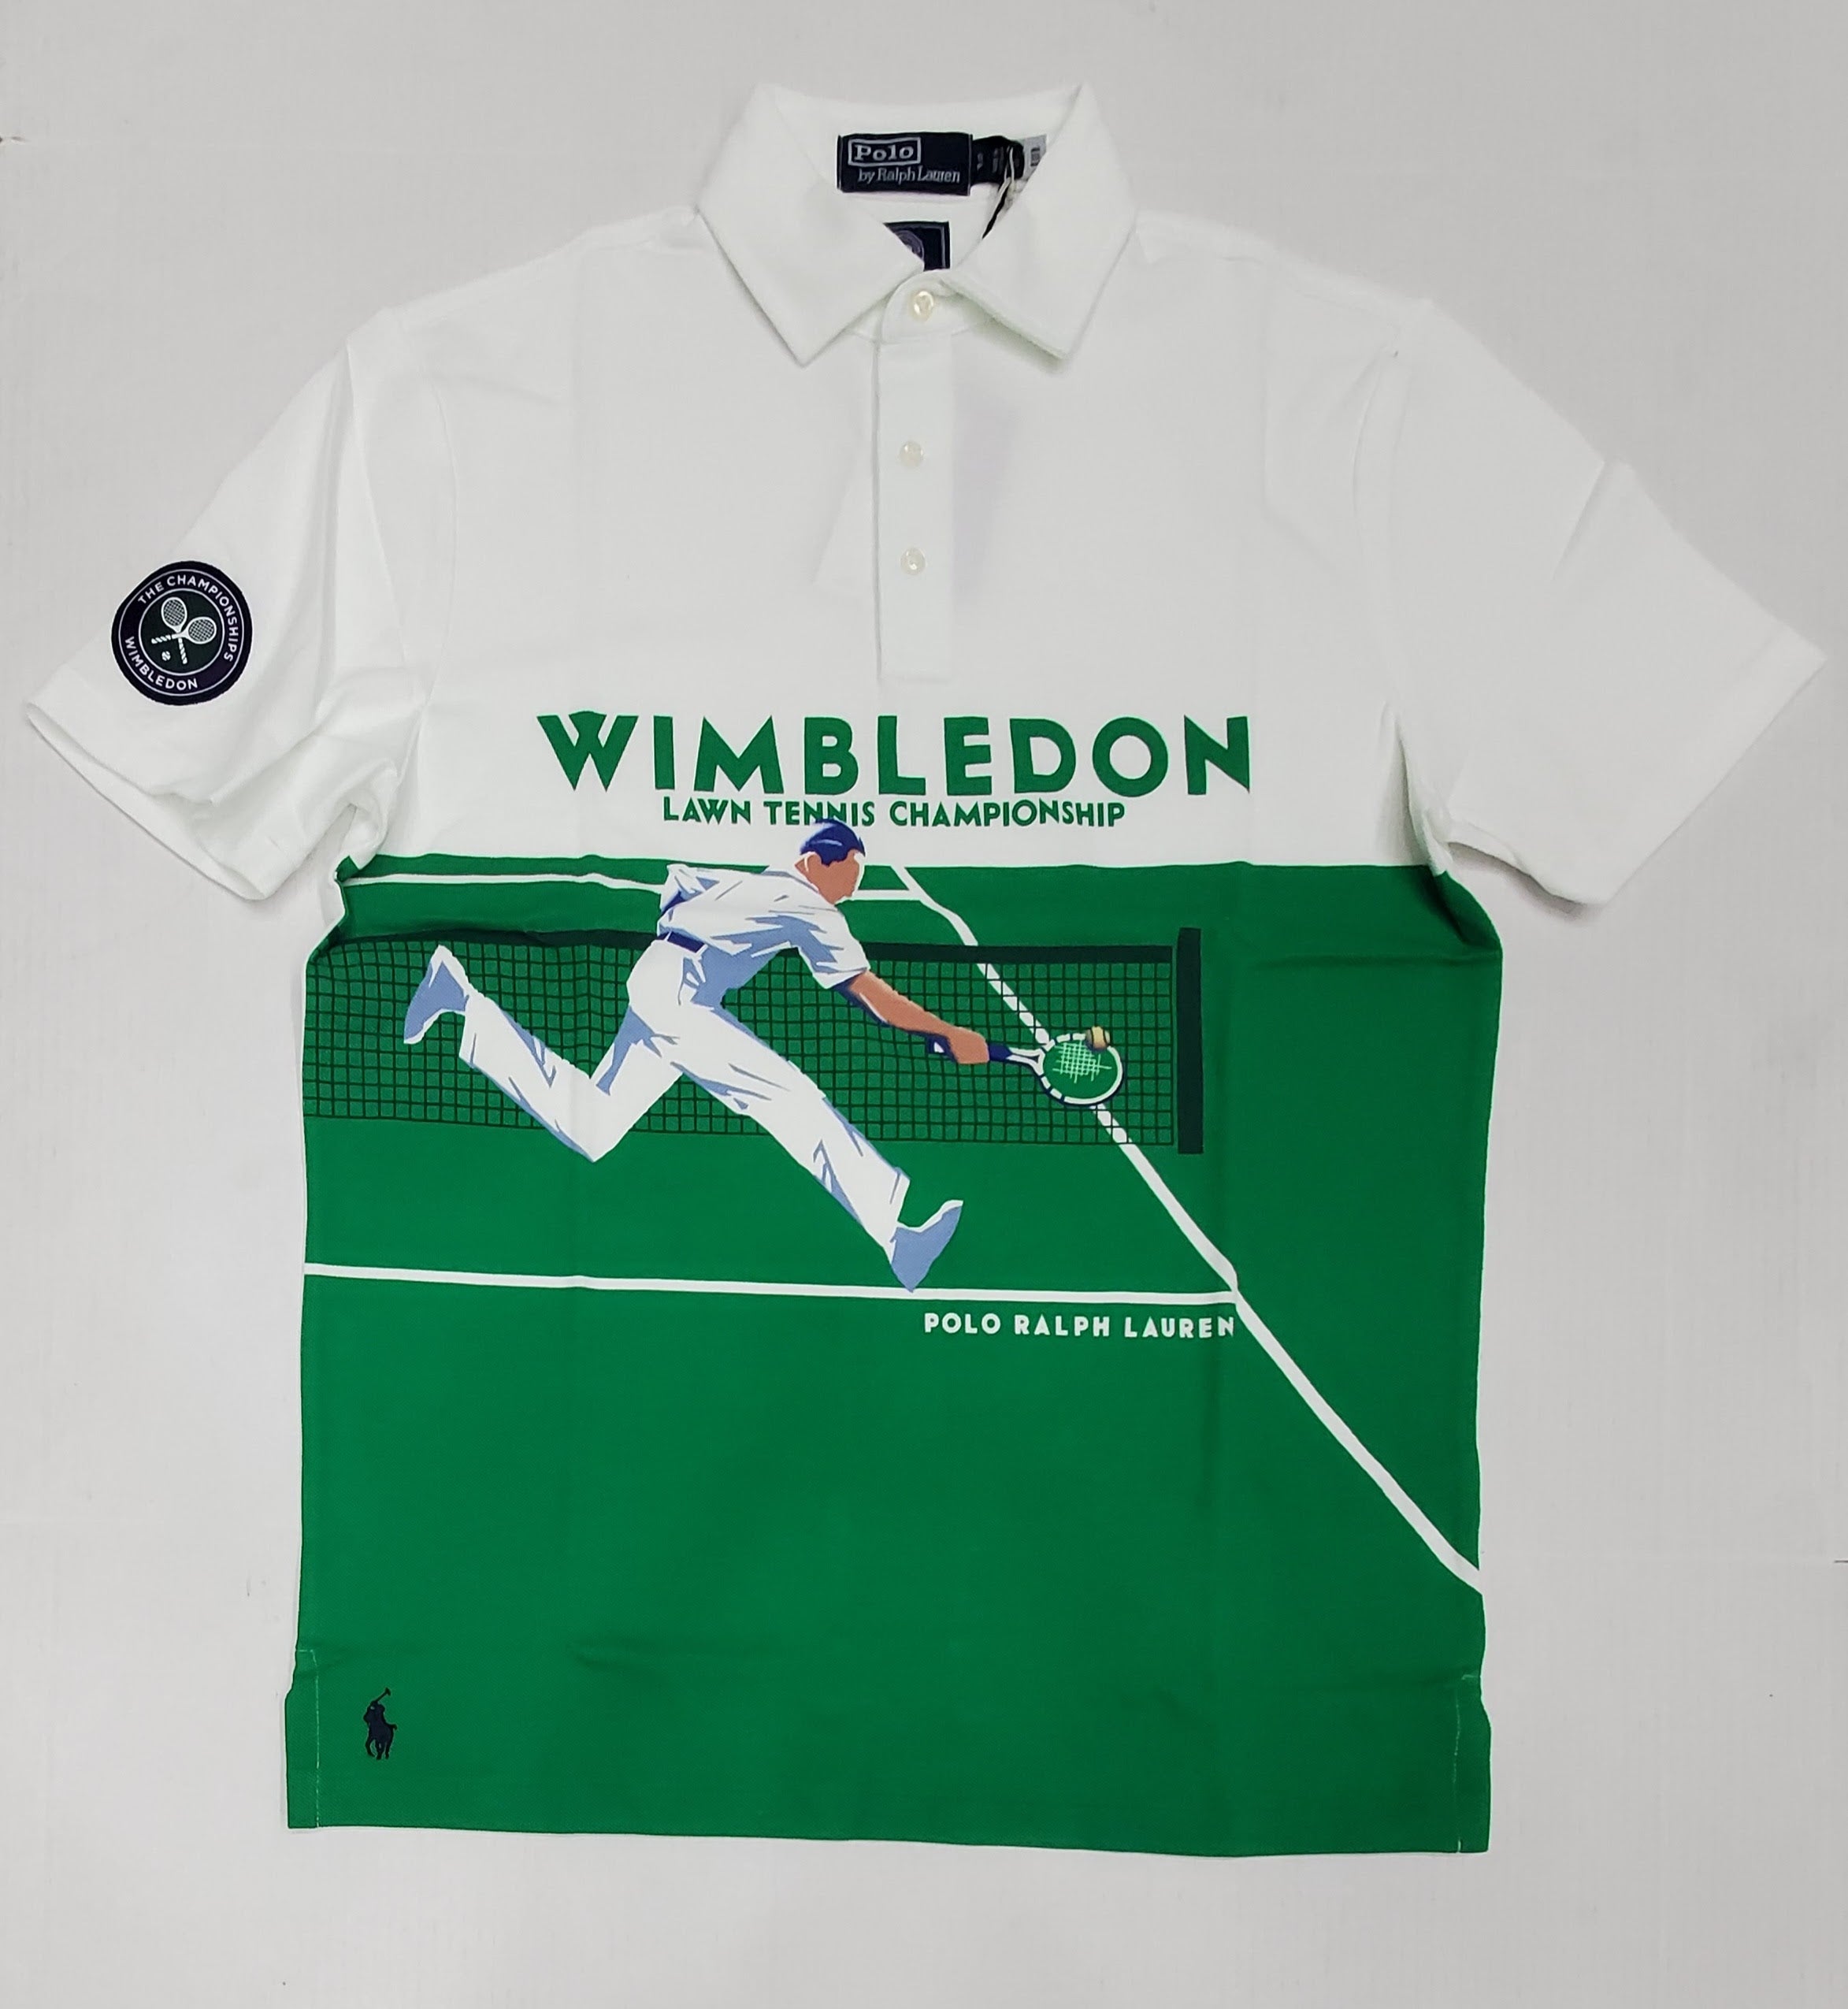 Wimbledon Lawn Tennis Championship Polo Ralph Lauren Shirt - teejeep